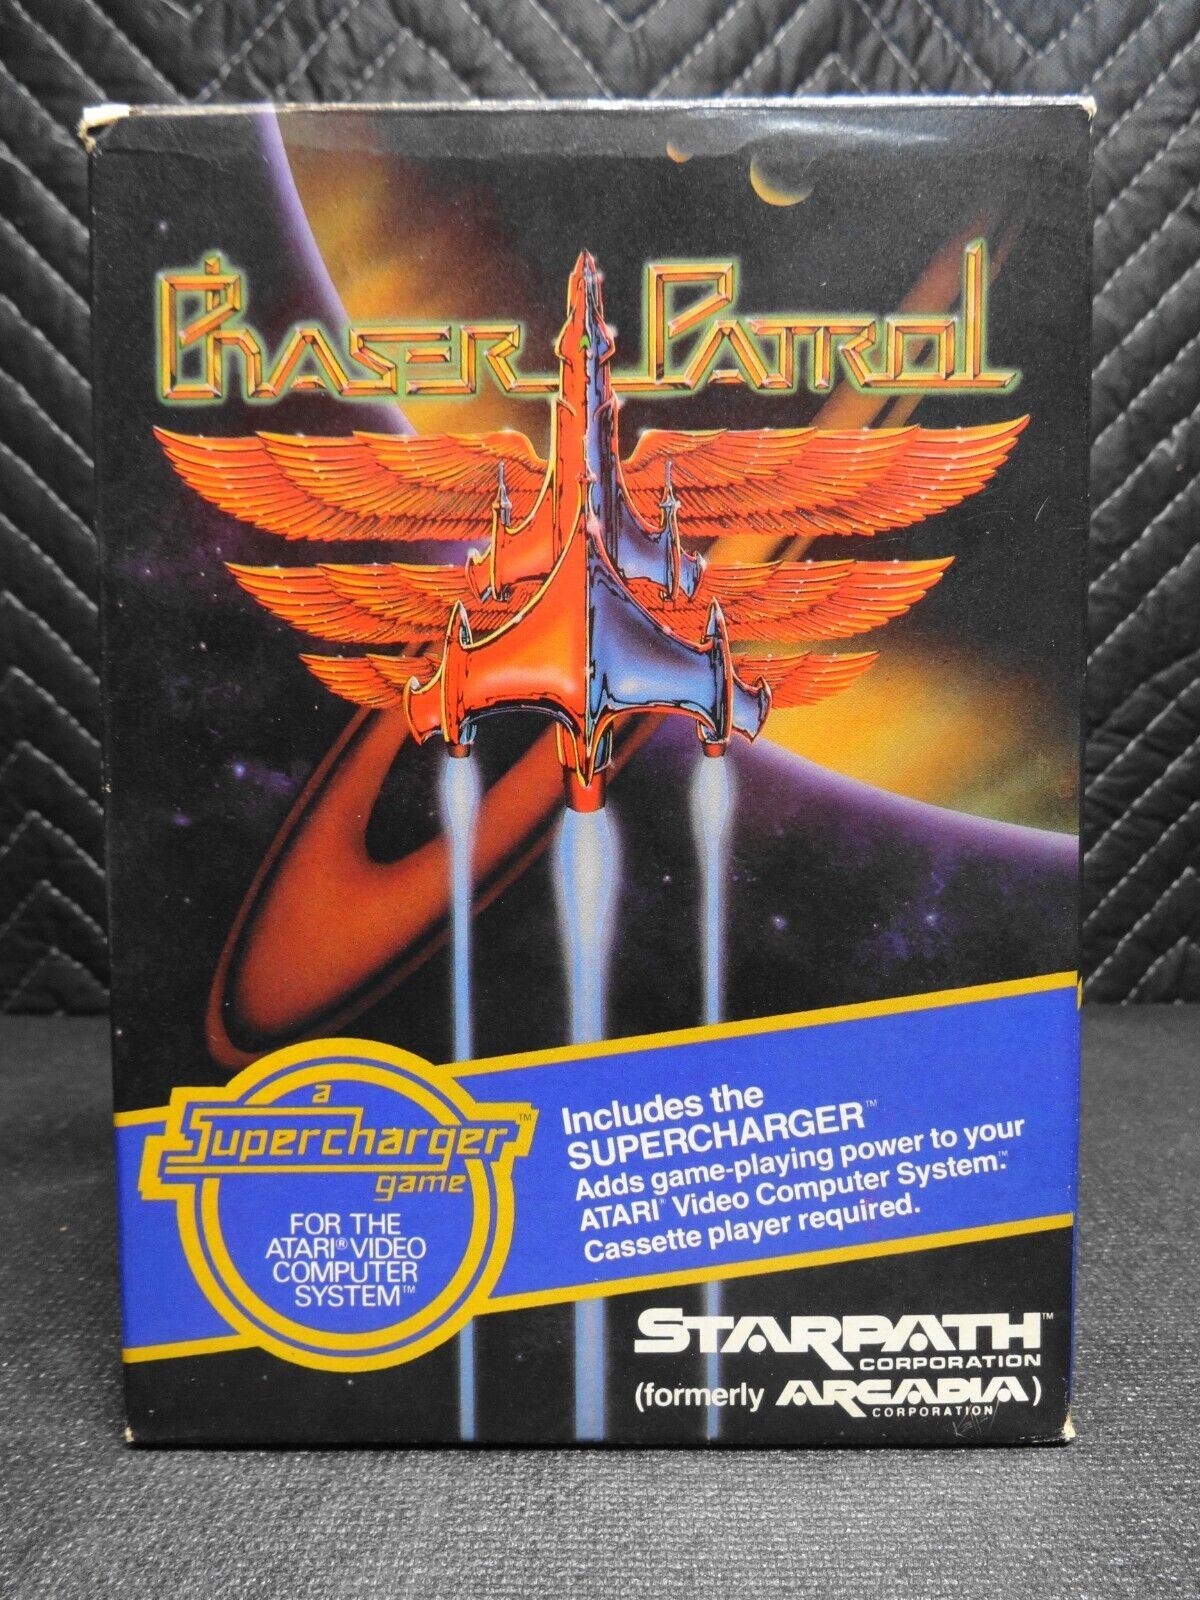 Phaser Patrol Supercharger Bundle Atari 2600 Video Game Complete in Big Box